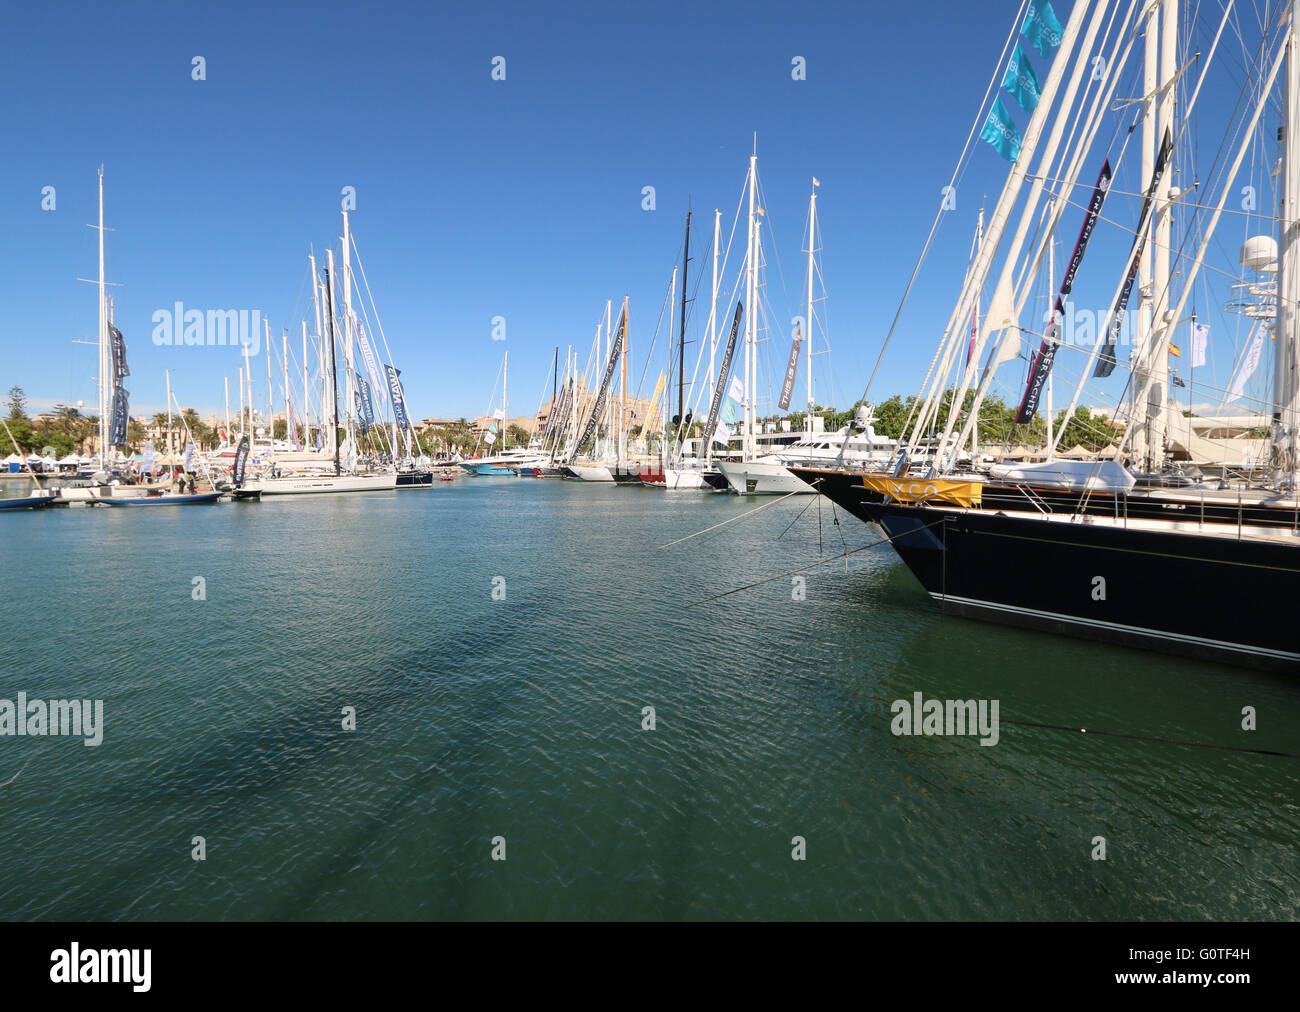 Images of Palma International Boat Show 2016 and Palma Superyacht Show 2016 - panorama of superyachts  + Palma Gothic Cathedral Stock Photo